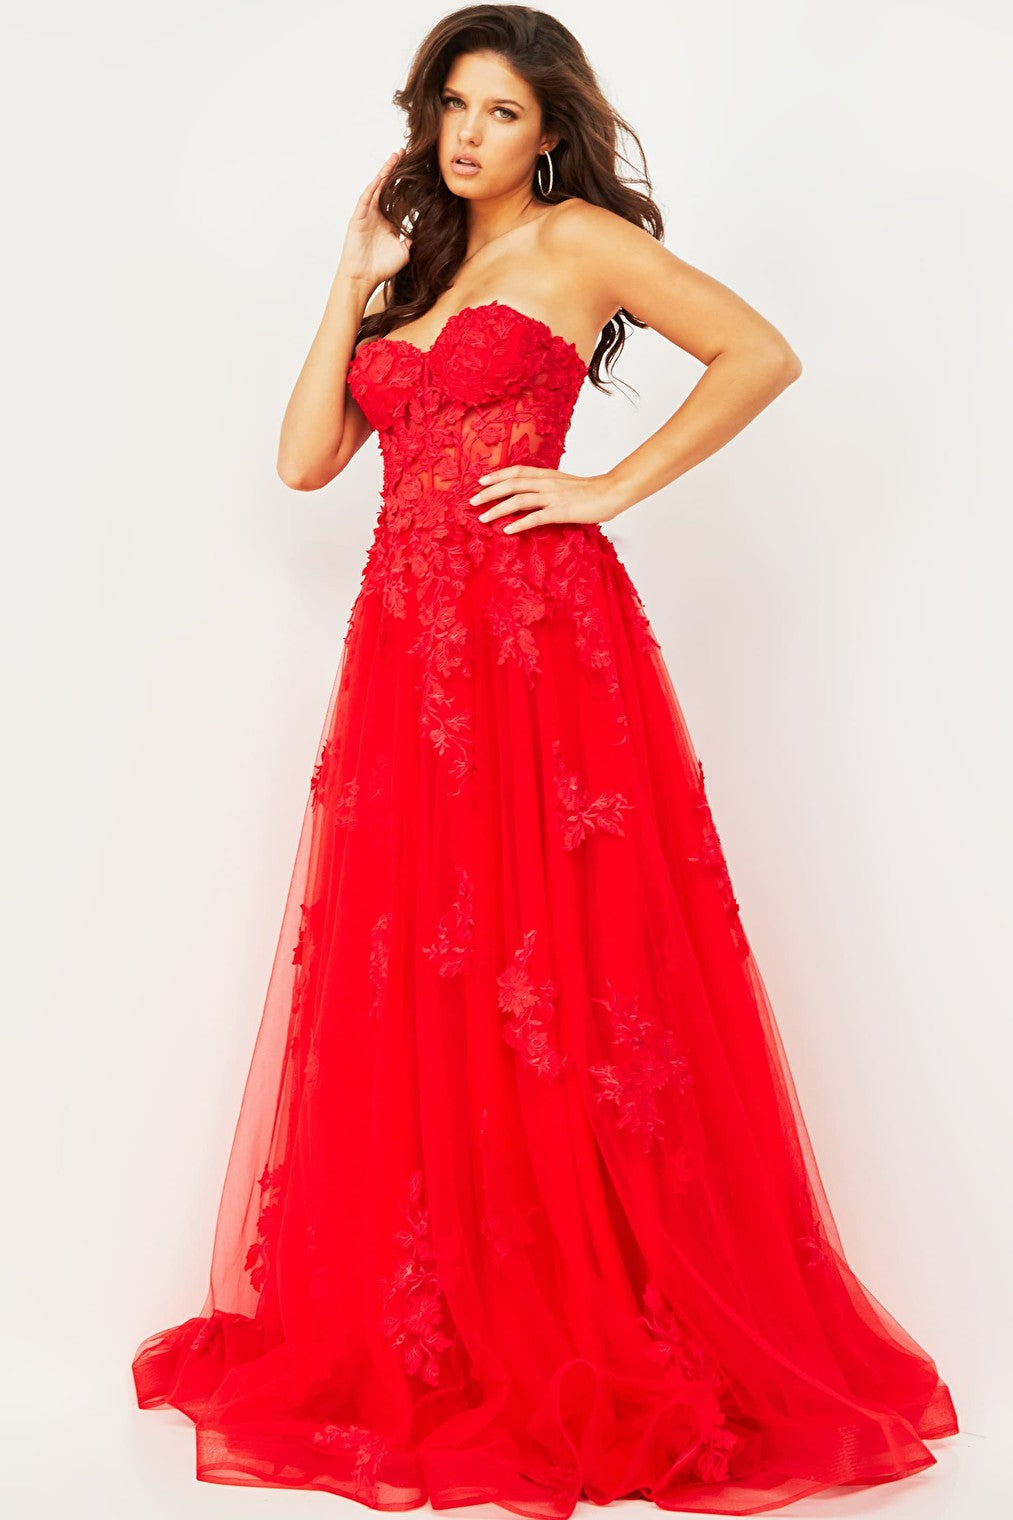 red dress 07901